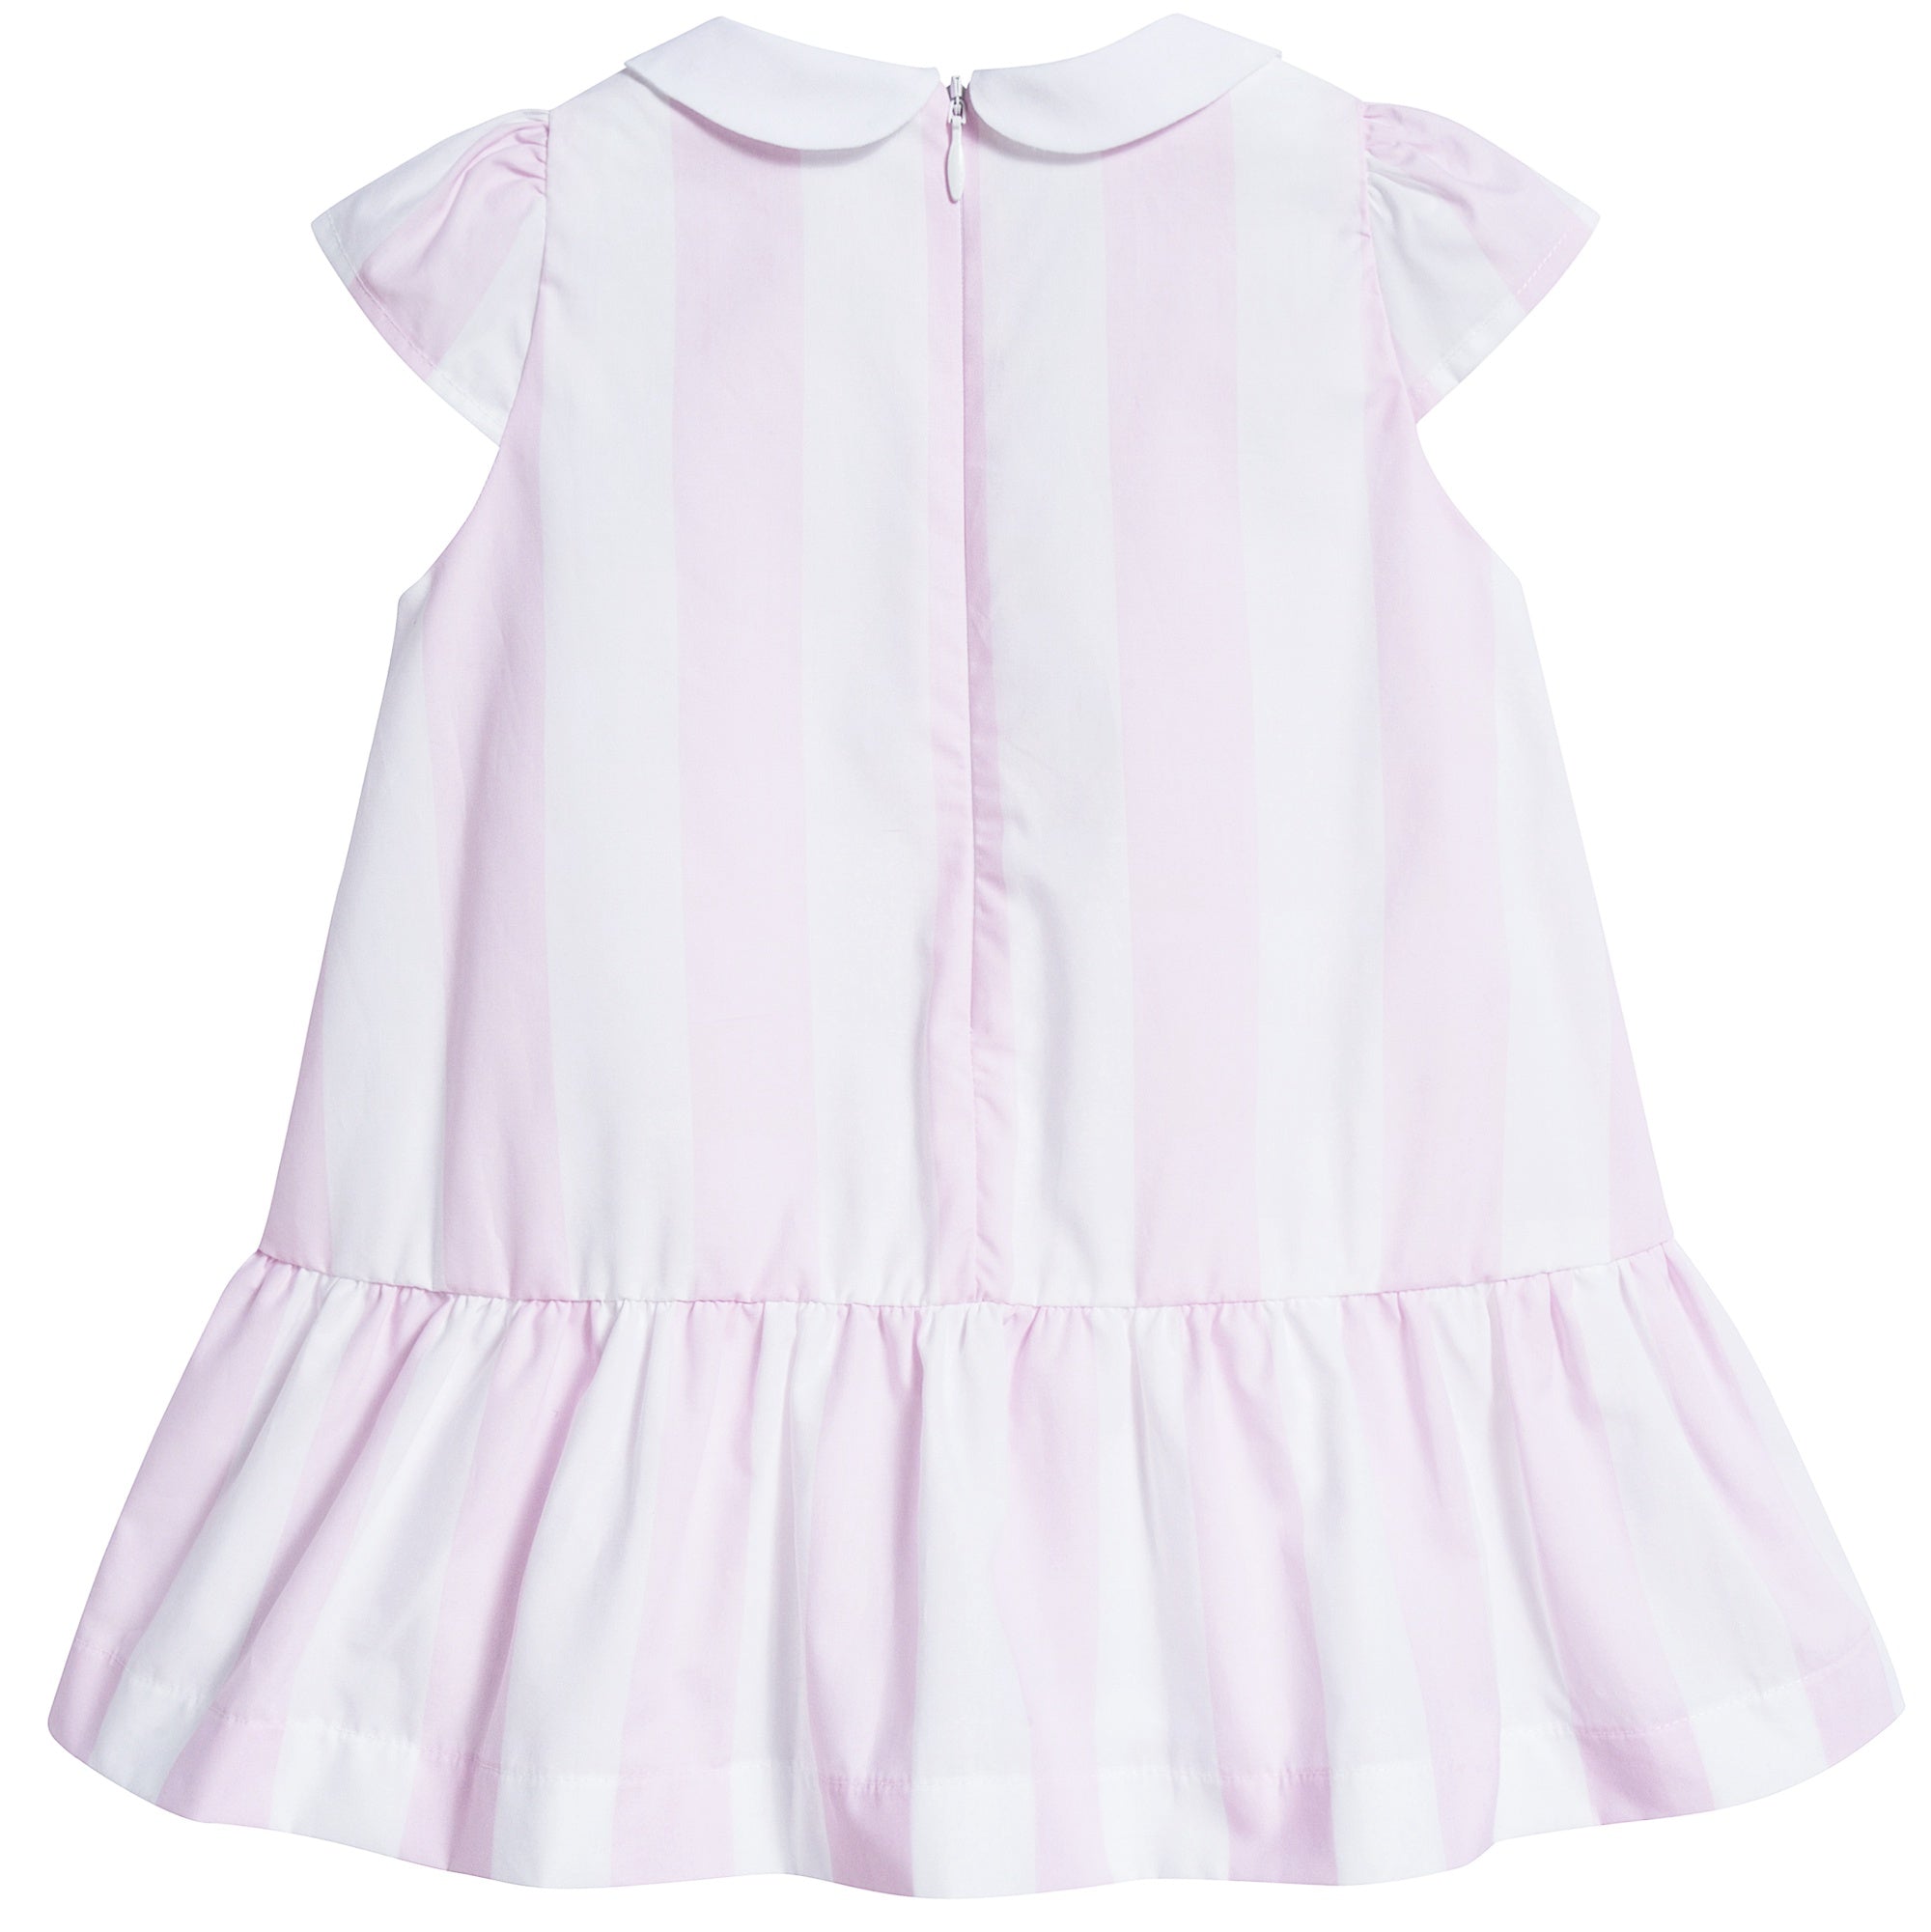 Baby Girls White & Pink Cotton Dress